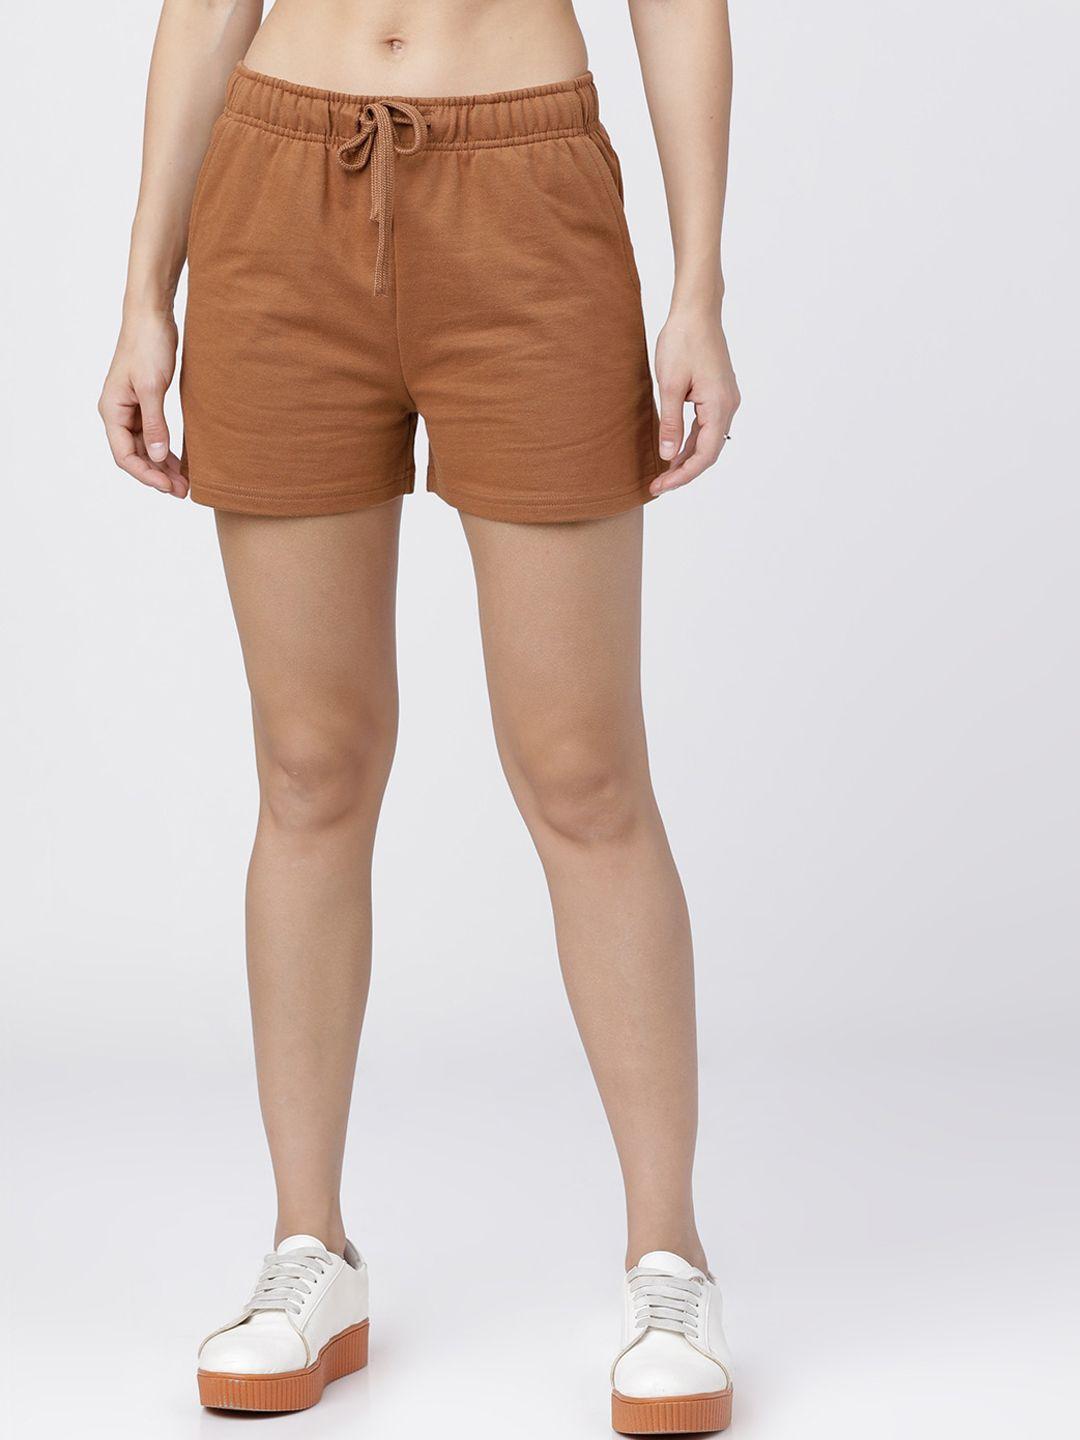 tokyo talkies women brown solid regular fit regular shorts